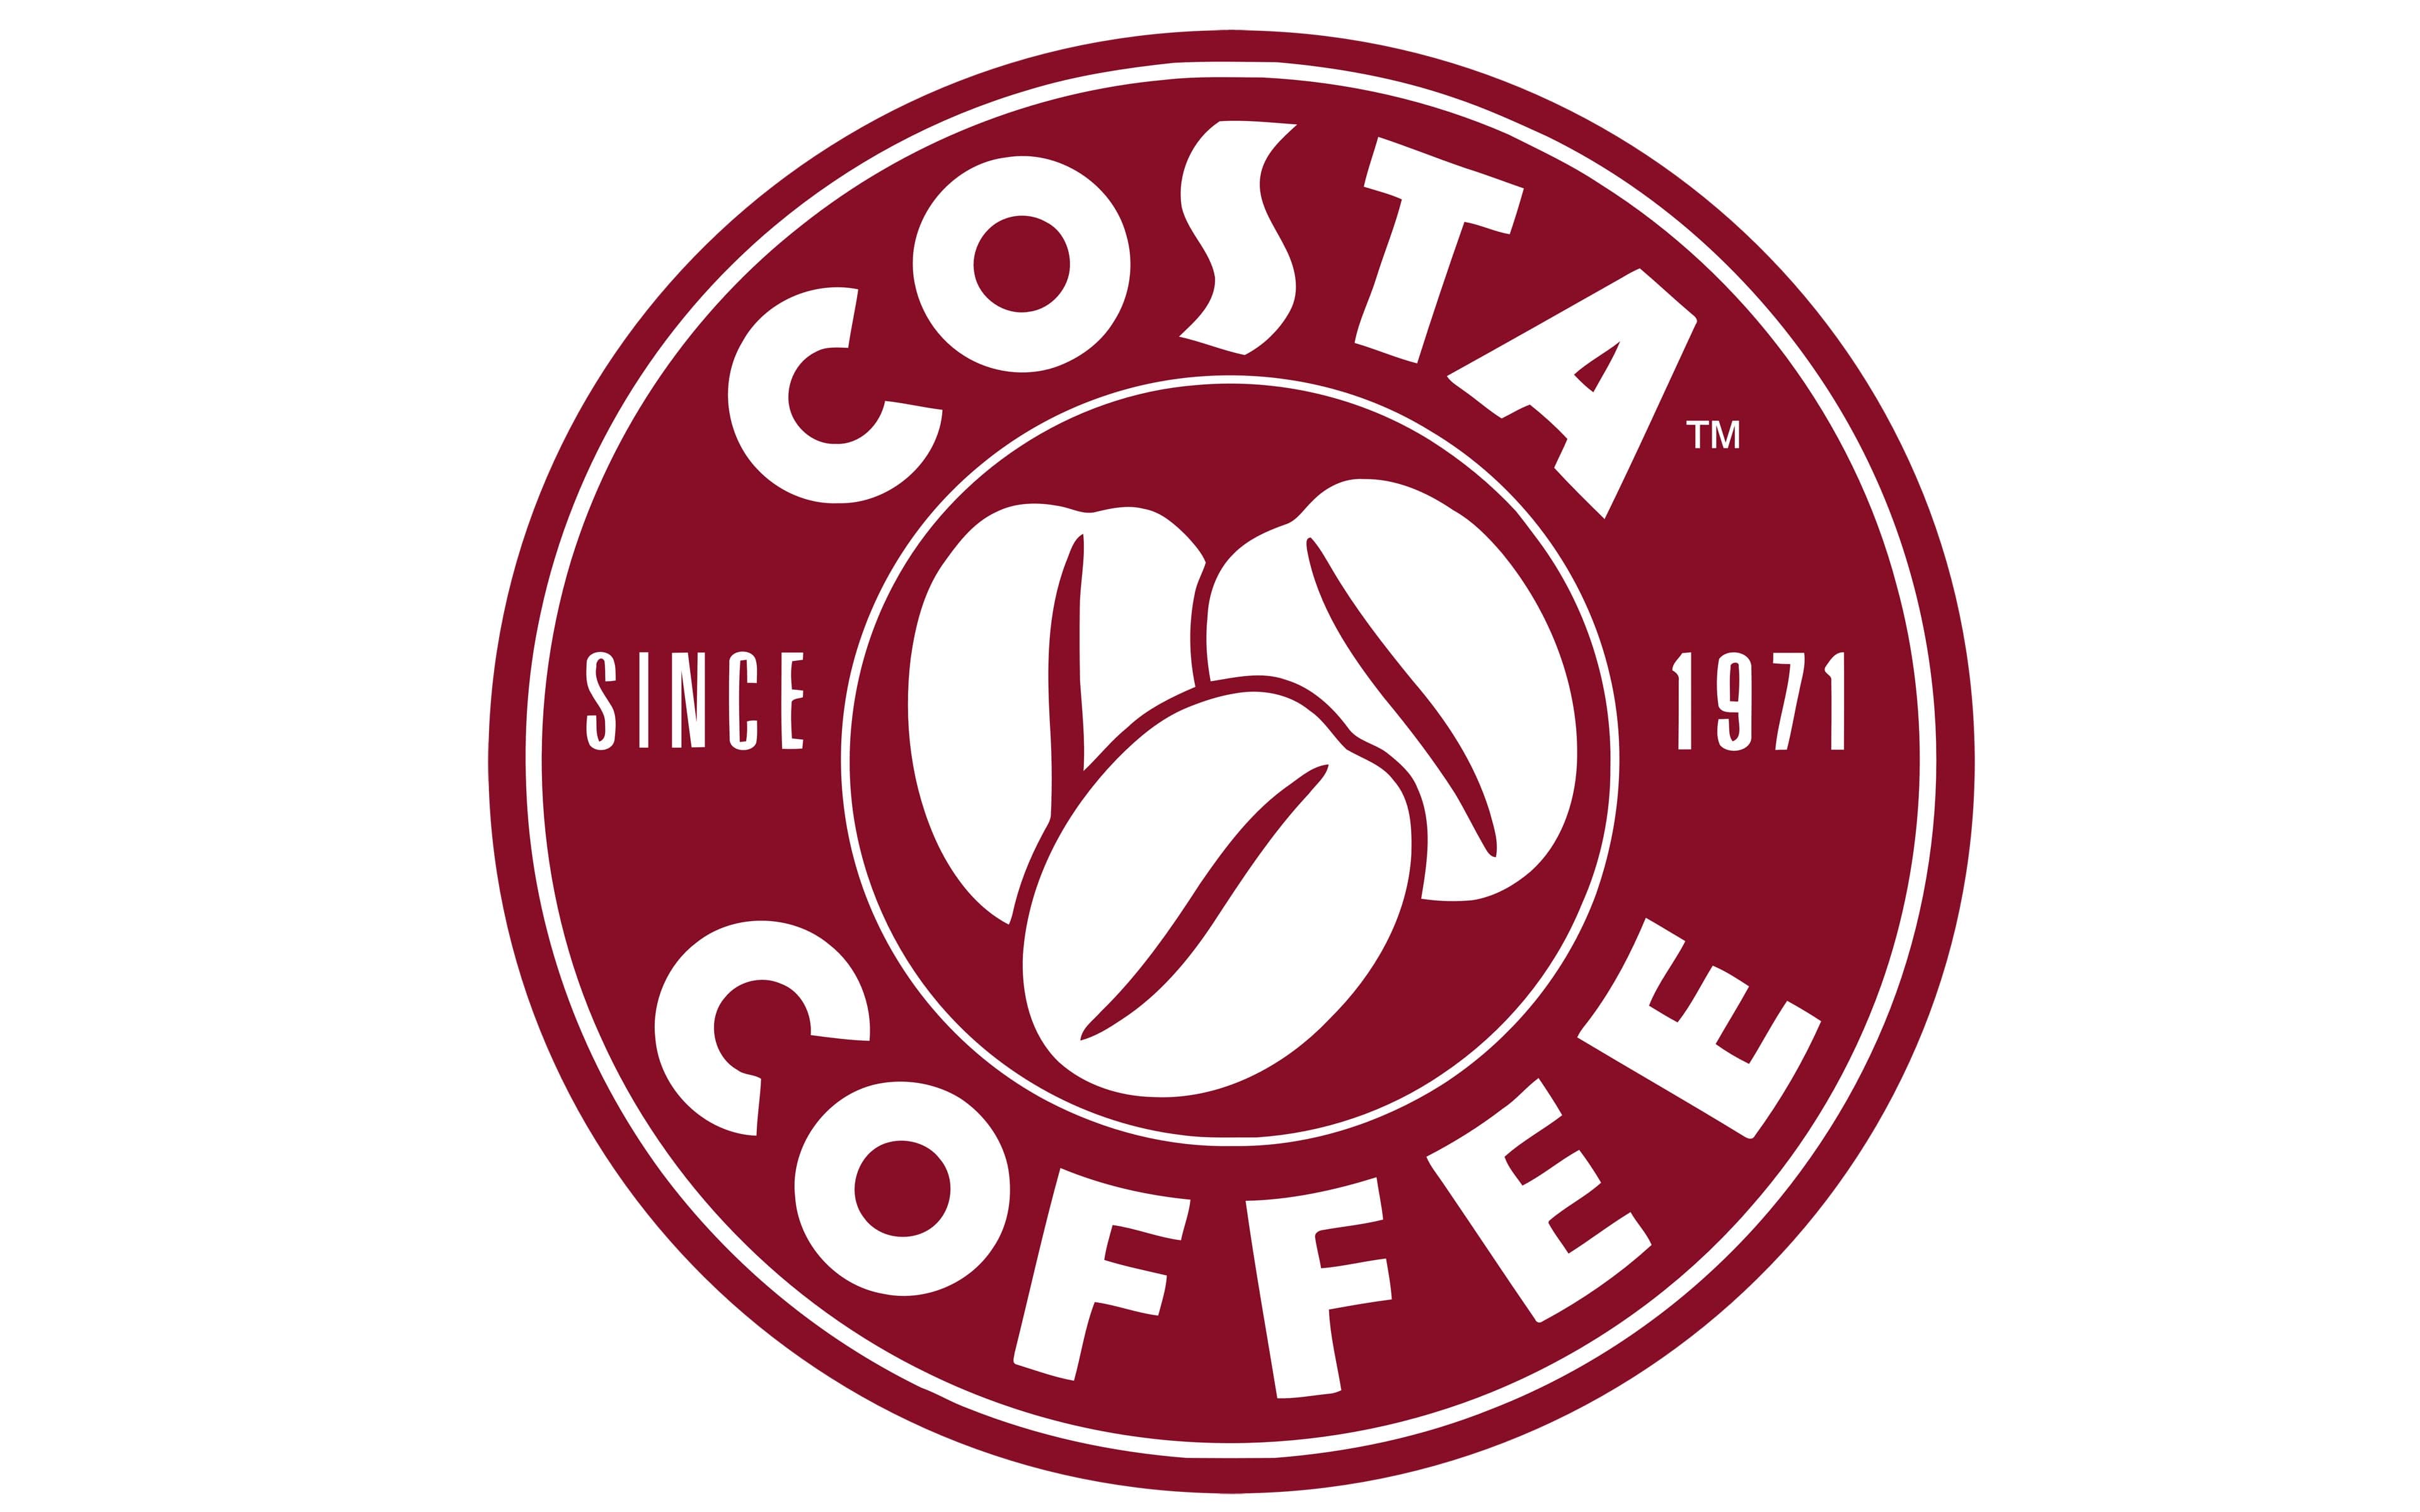 coffee brands logos